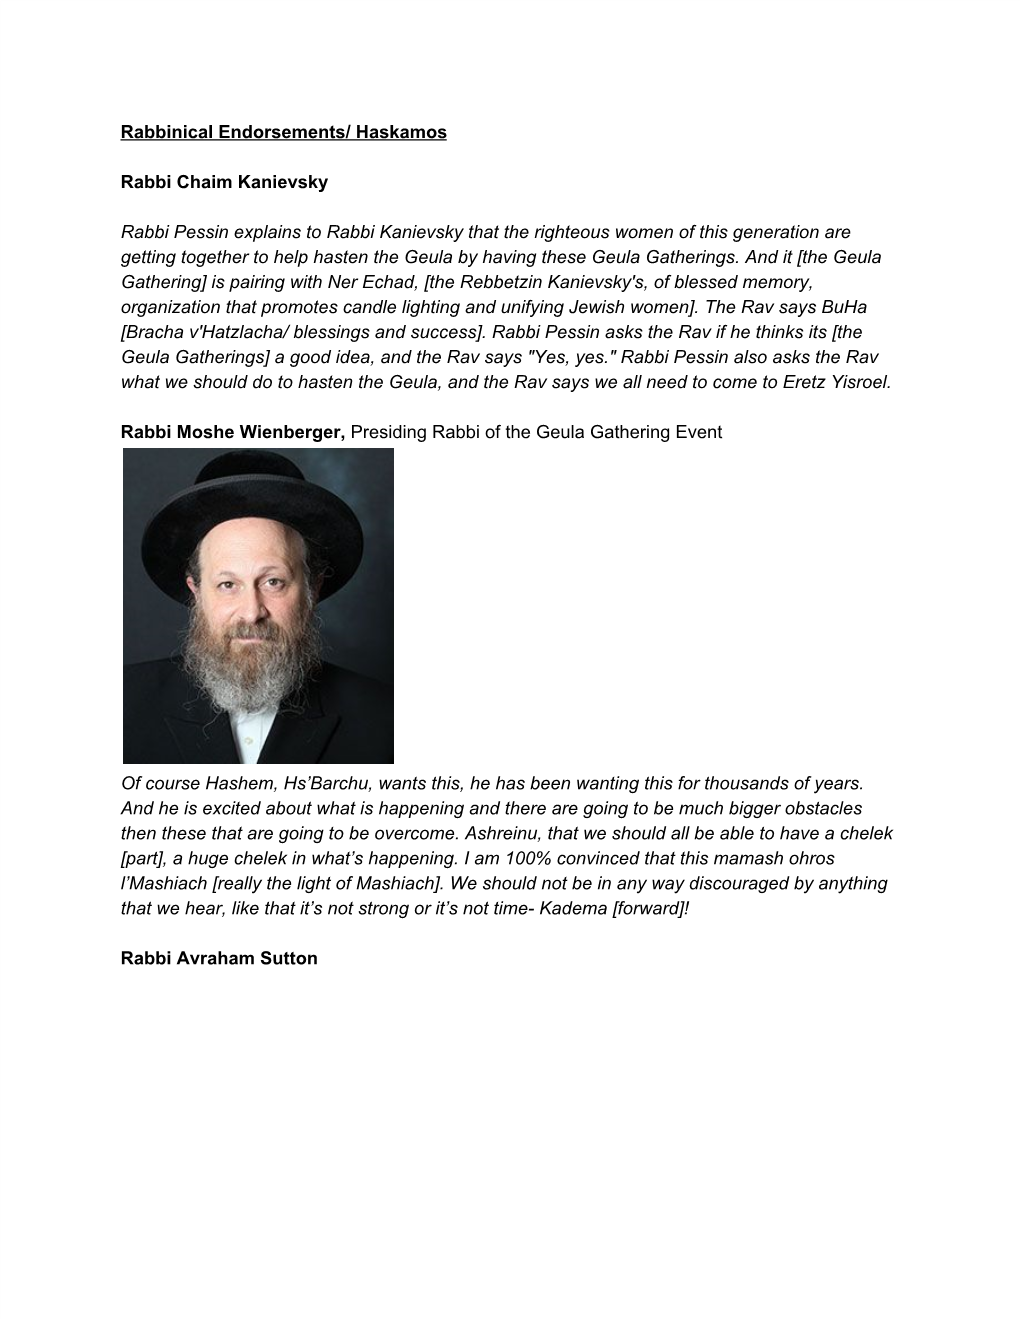 Rabbinical Endorsements/ Haskamos Rabbi Chaim Kanievsky Rabbi